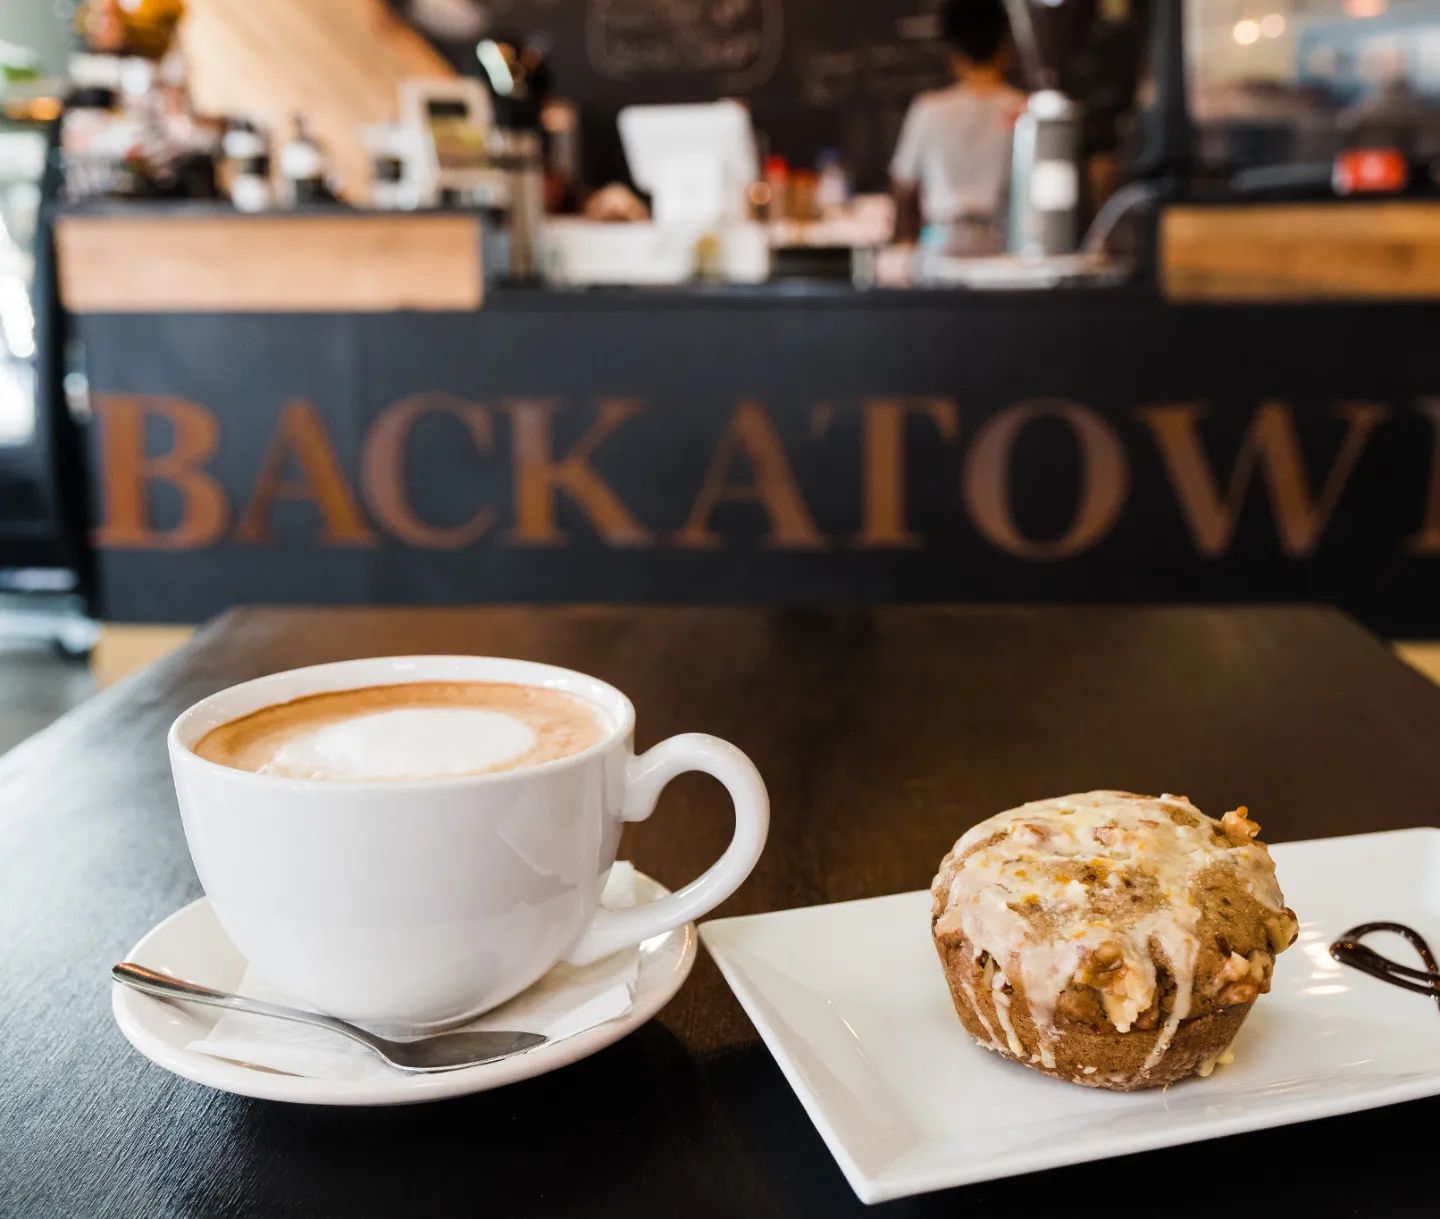 Backatown Coffee